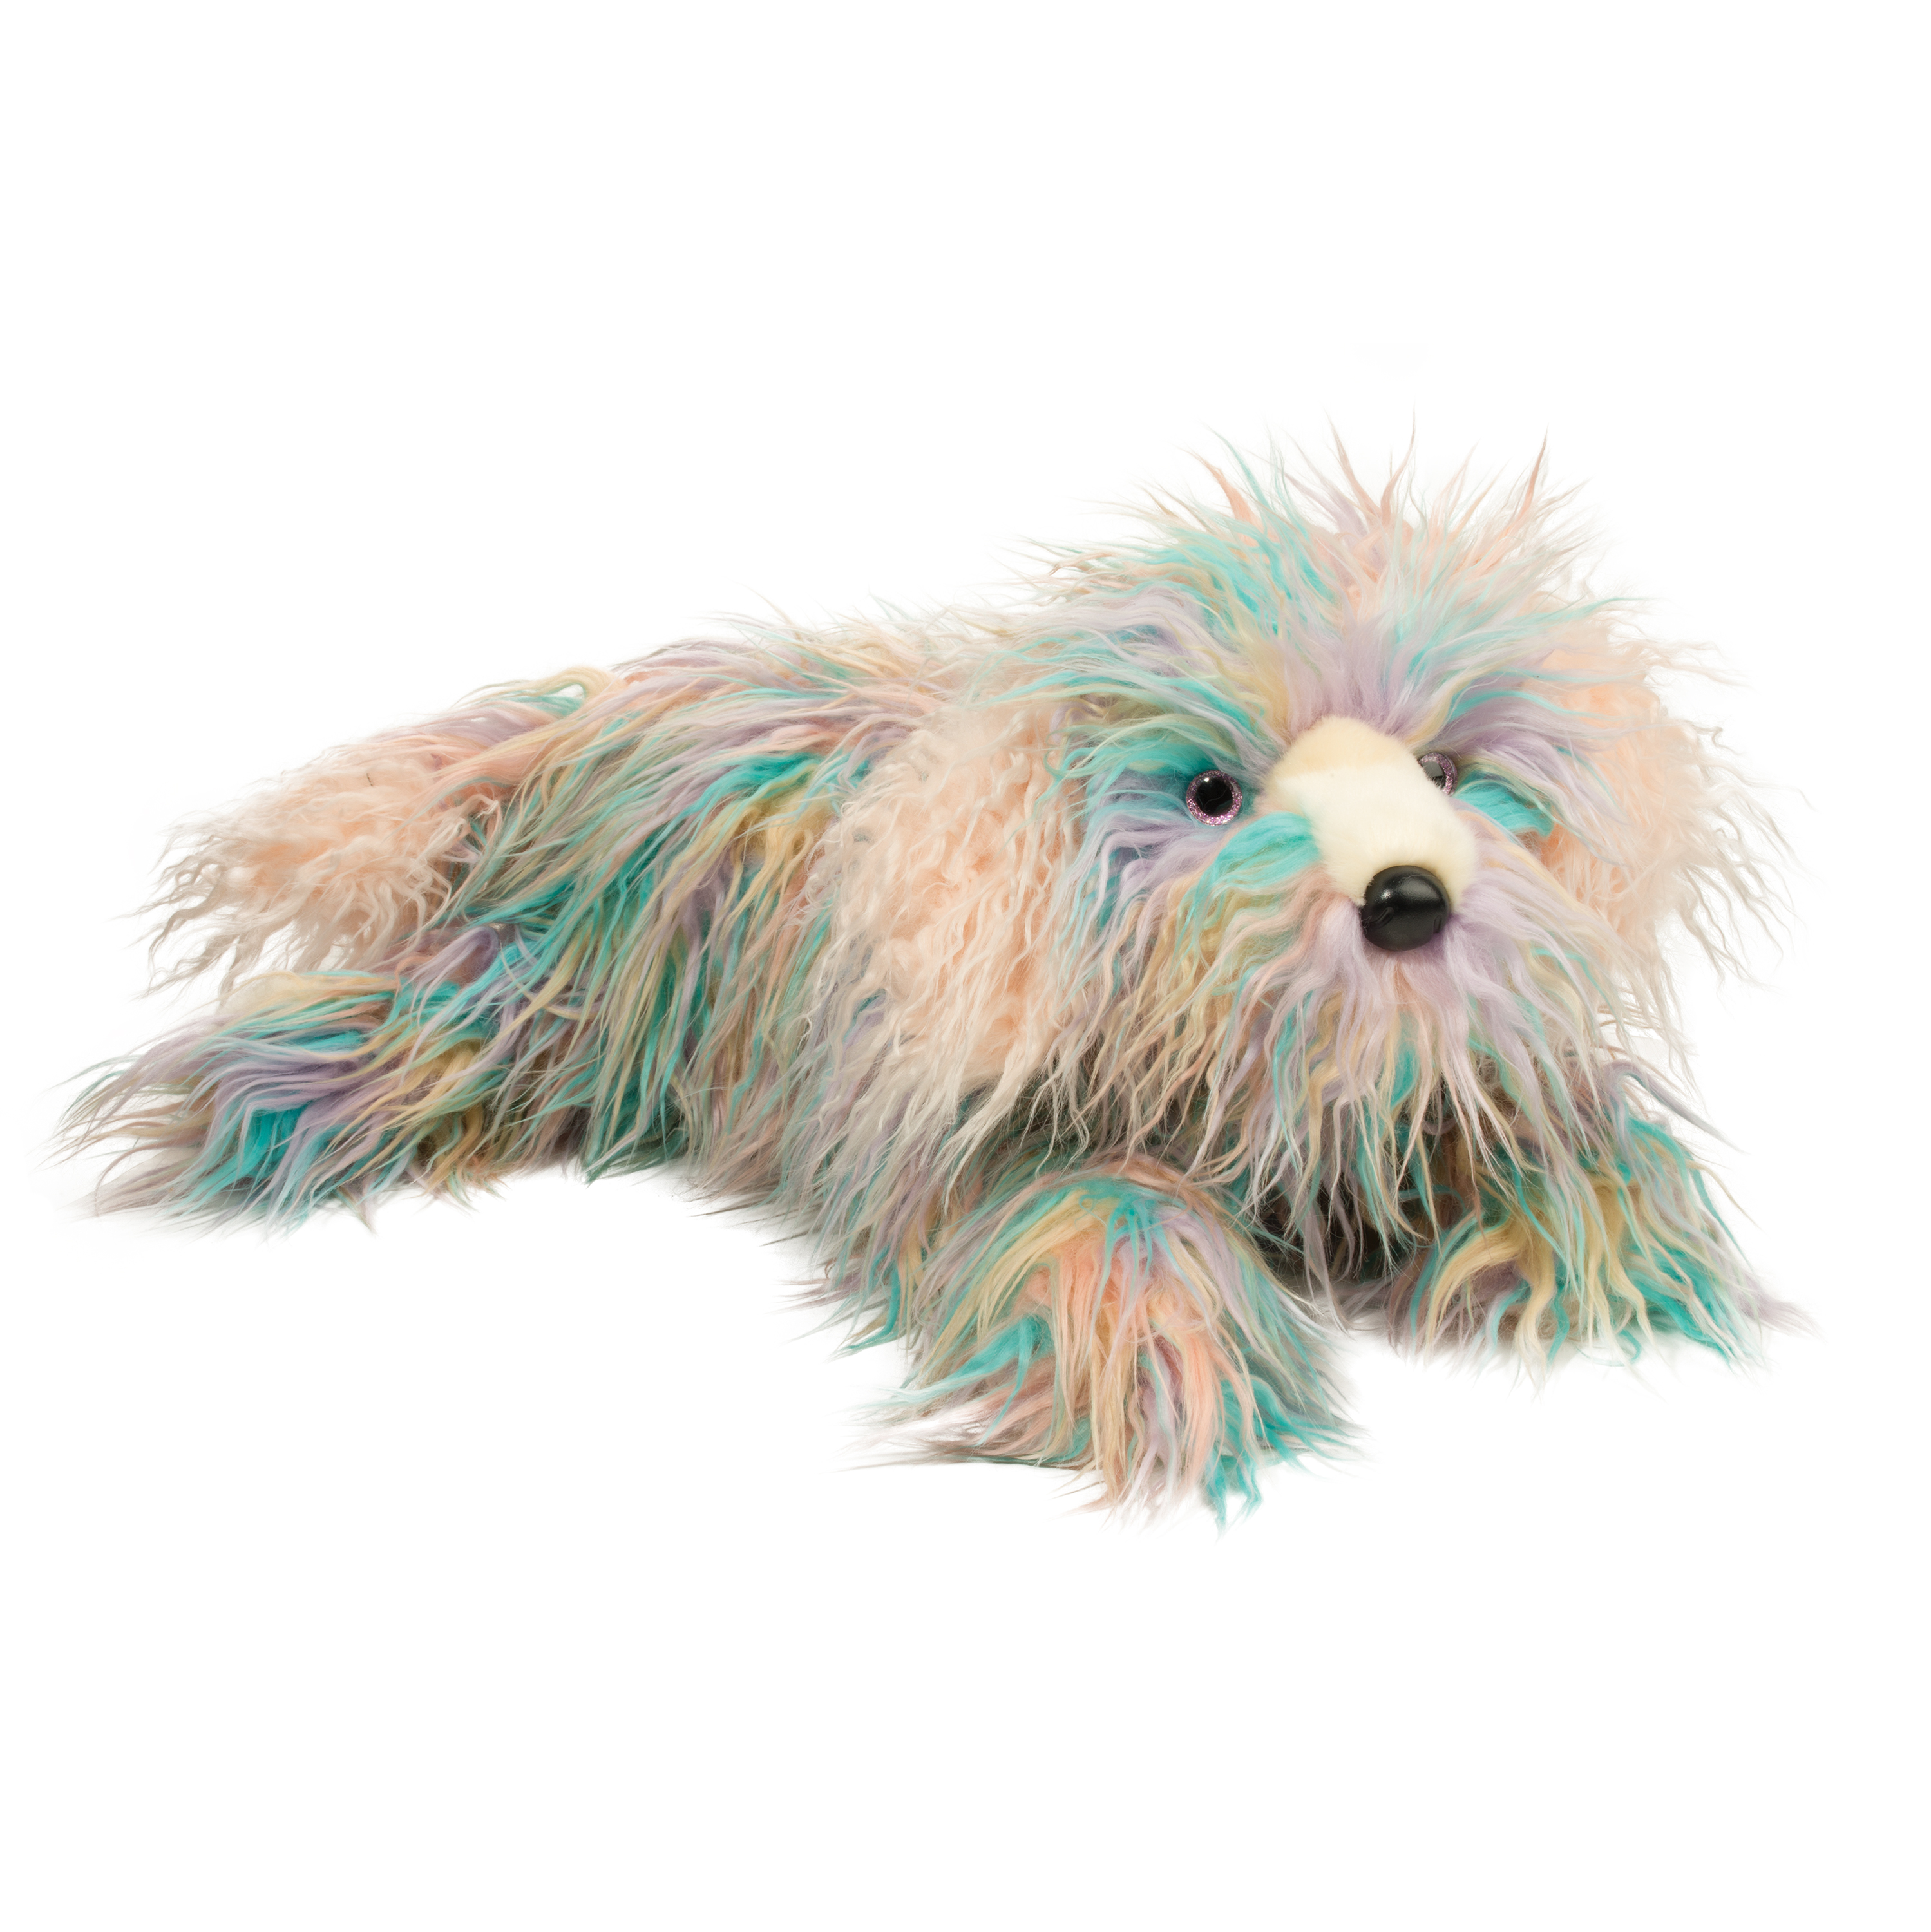 rainbow dog stuffed animal